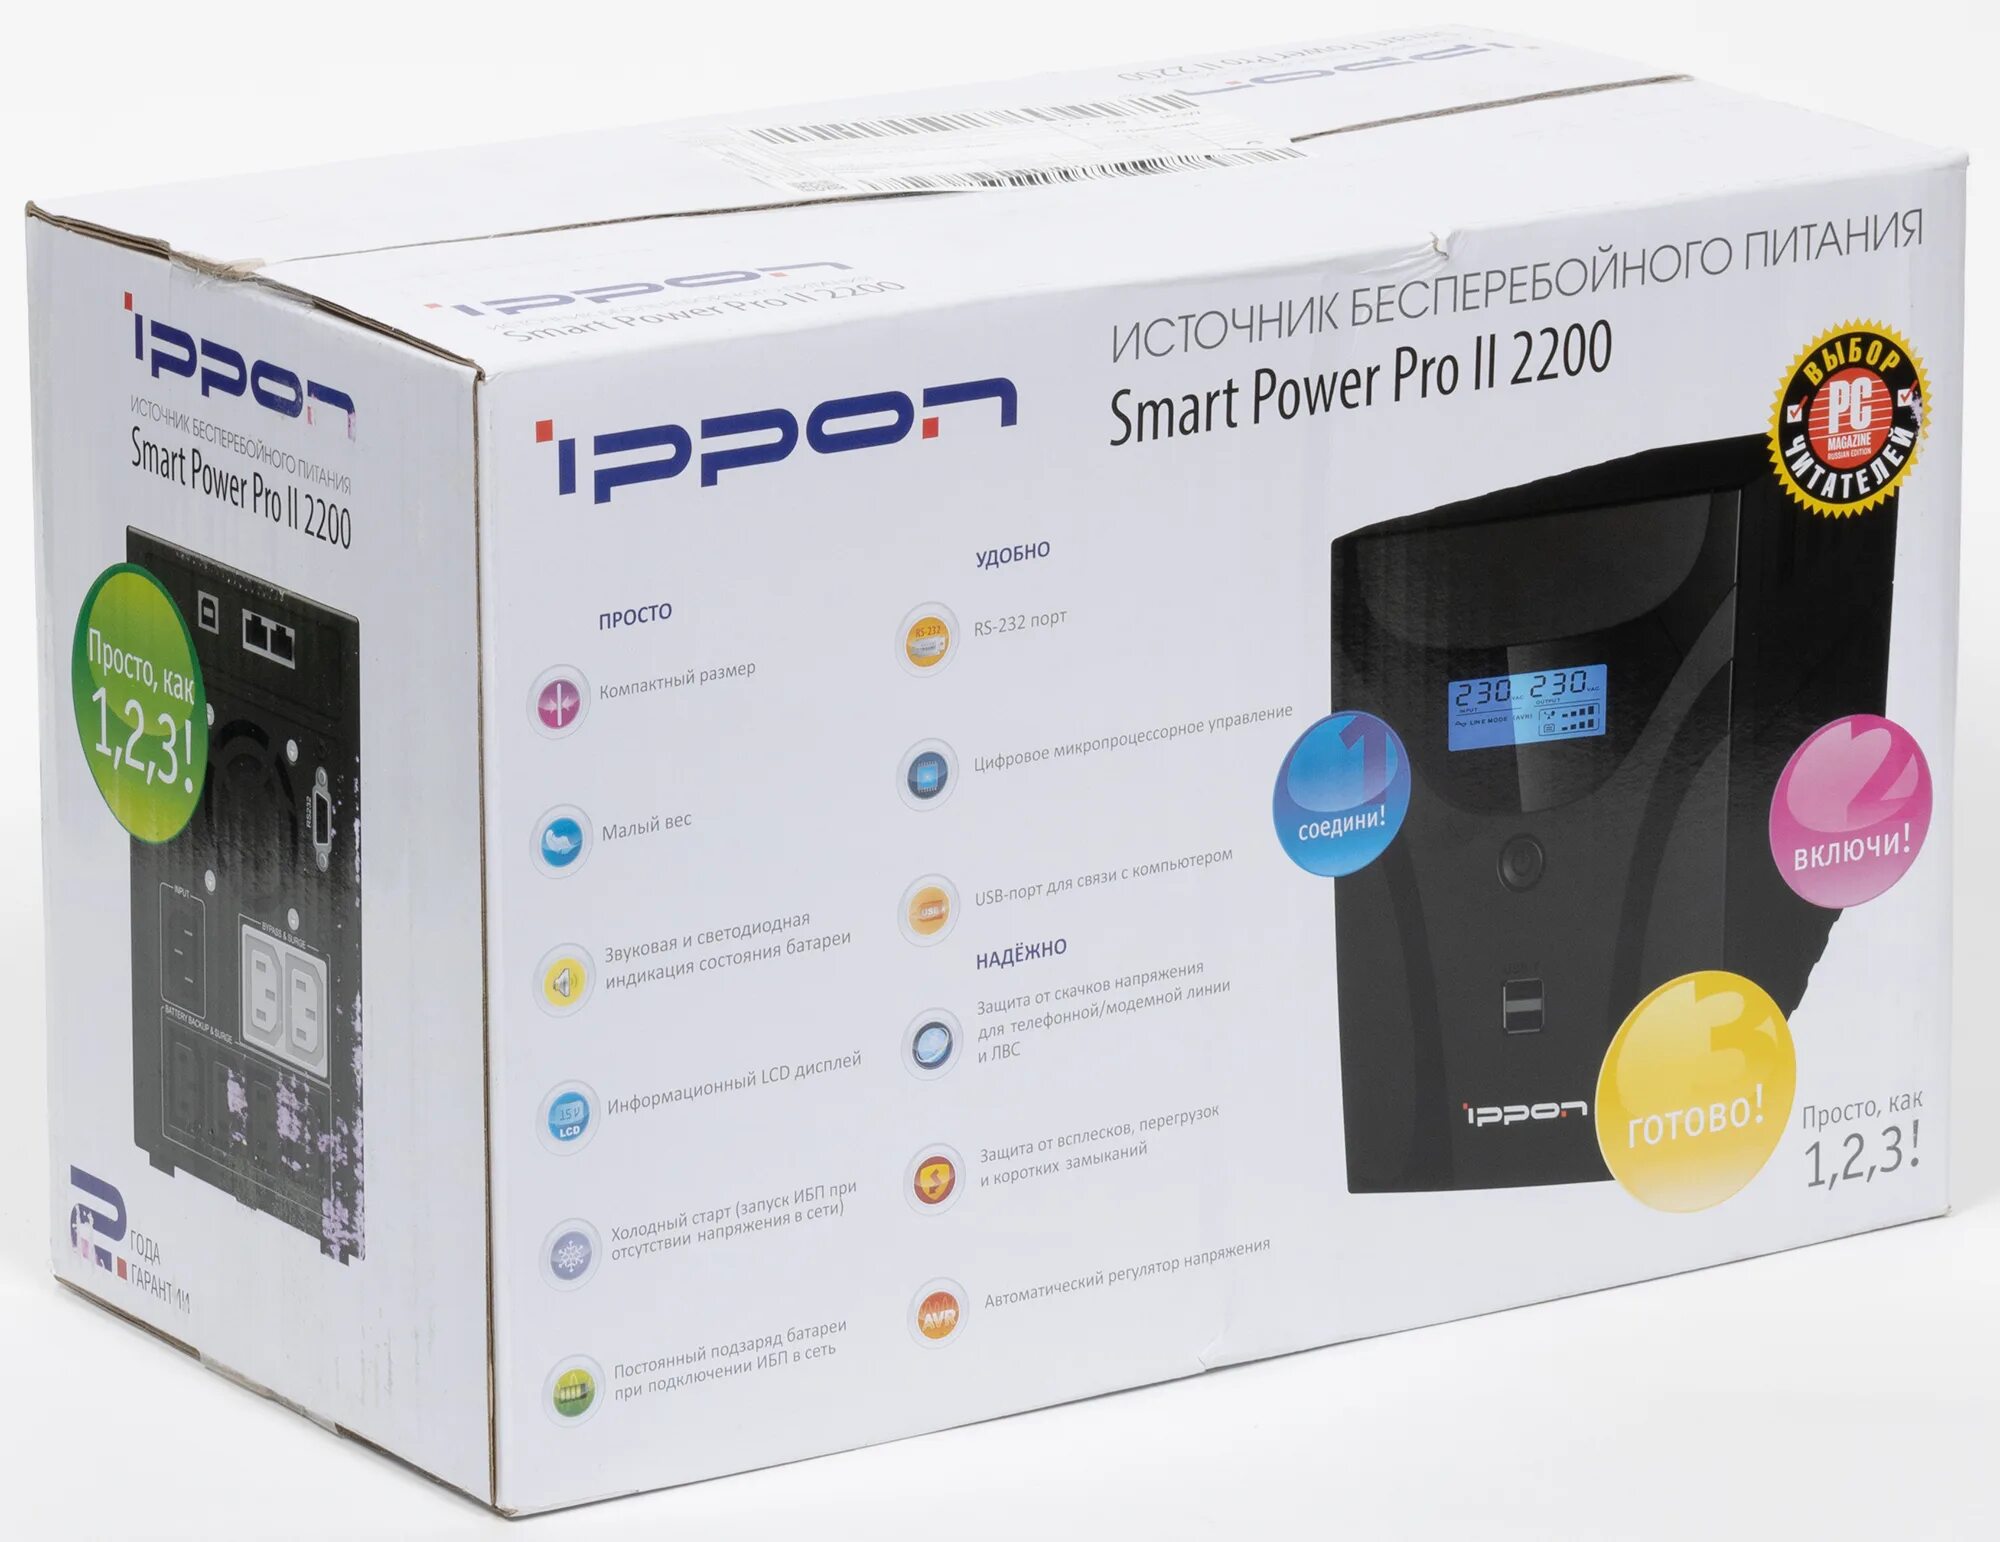 Ippon Smart Power Pro II 2200. Ippon Smart Power Pro II. Ippon 1200 Euro. Ippon Smart Power Pro II Euro 1200. Смарт пауэр